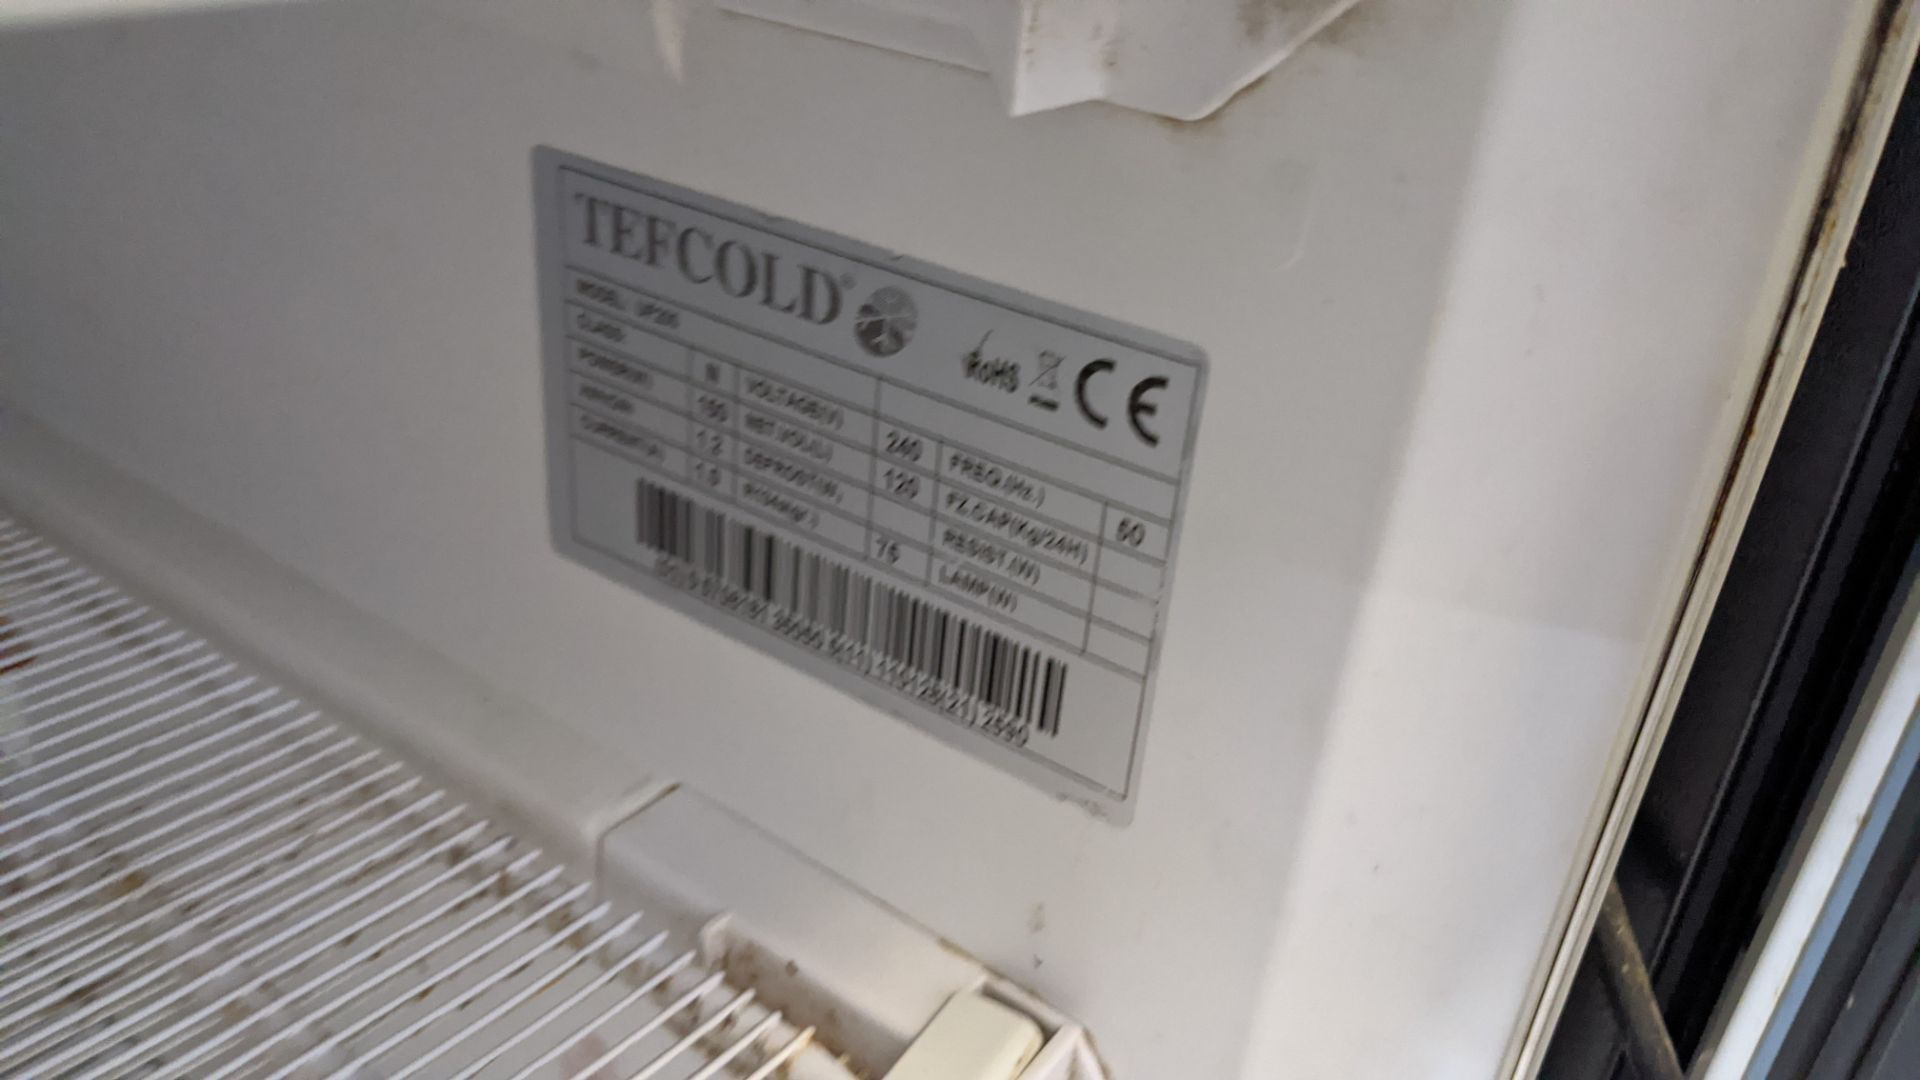 Tefcold UF200 undercounter freezer - Image 4 of 4